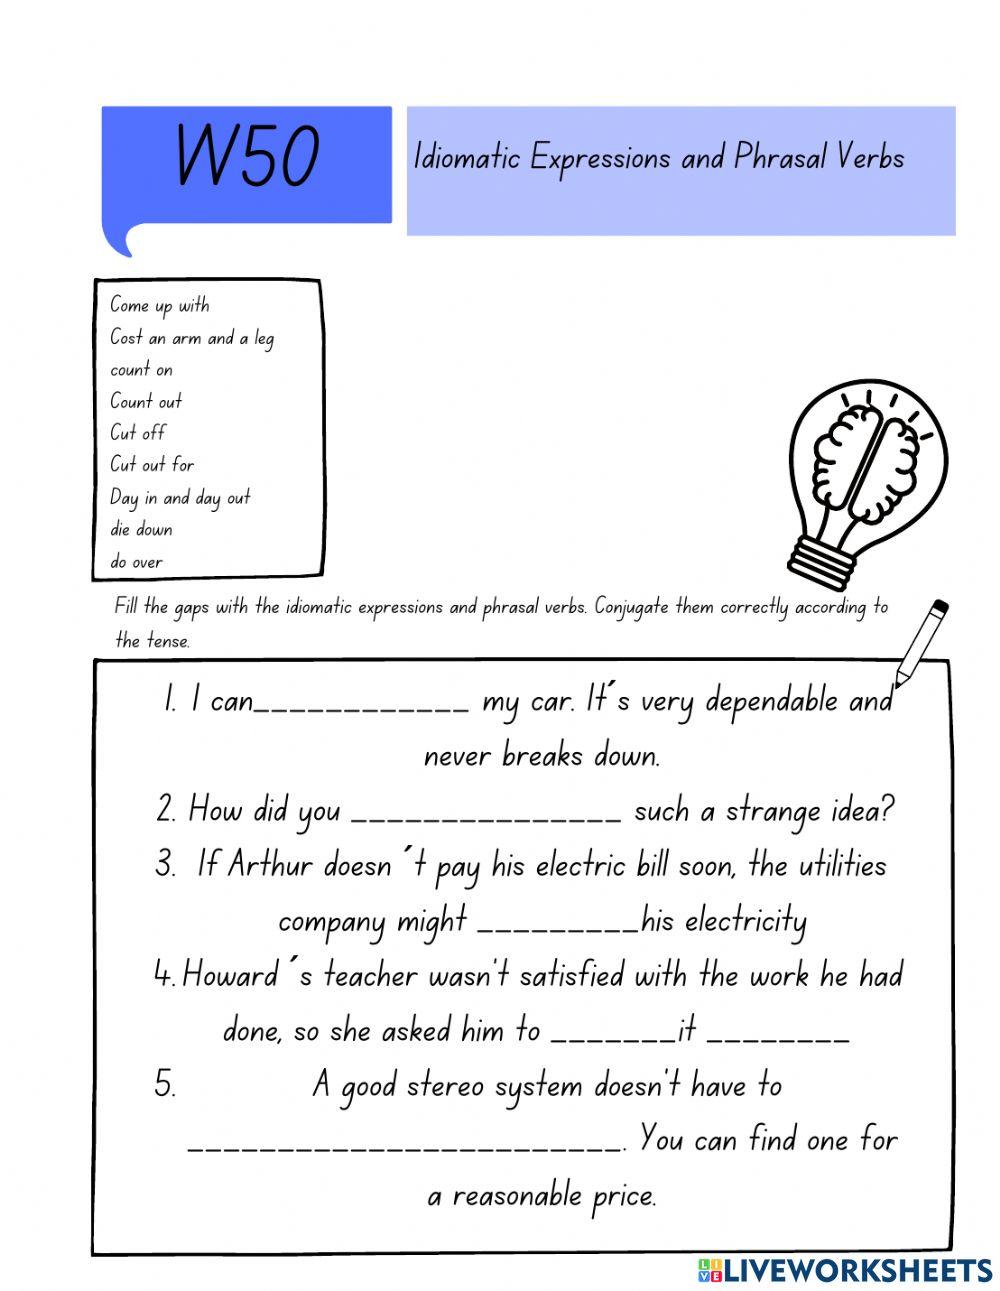 Idiomatic Expressions and Phrasal Verbs Week 50